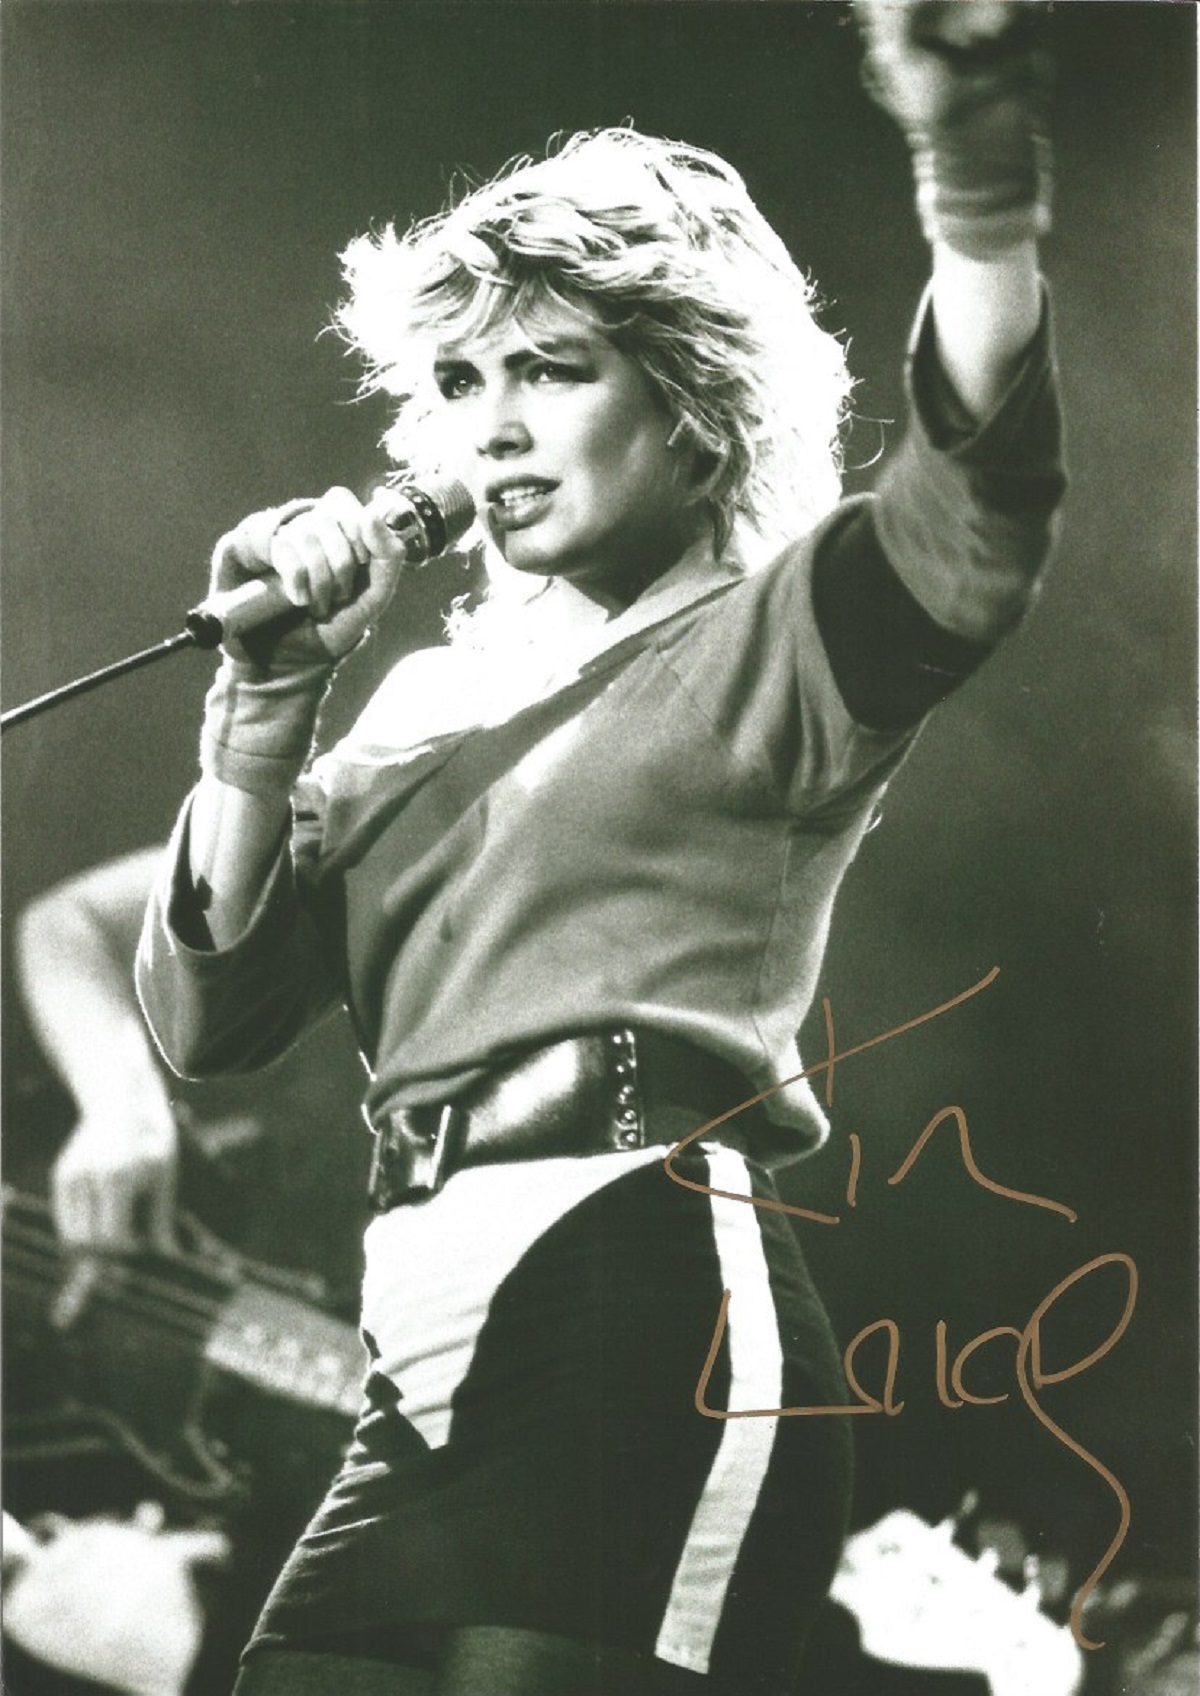 Kim Wilde signed 12x8 black and white photo. Kim Wilde (born Kim Smith; 18 November 1960) is an